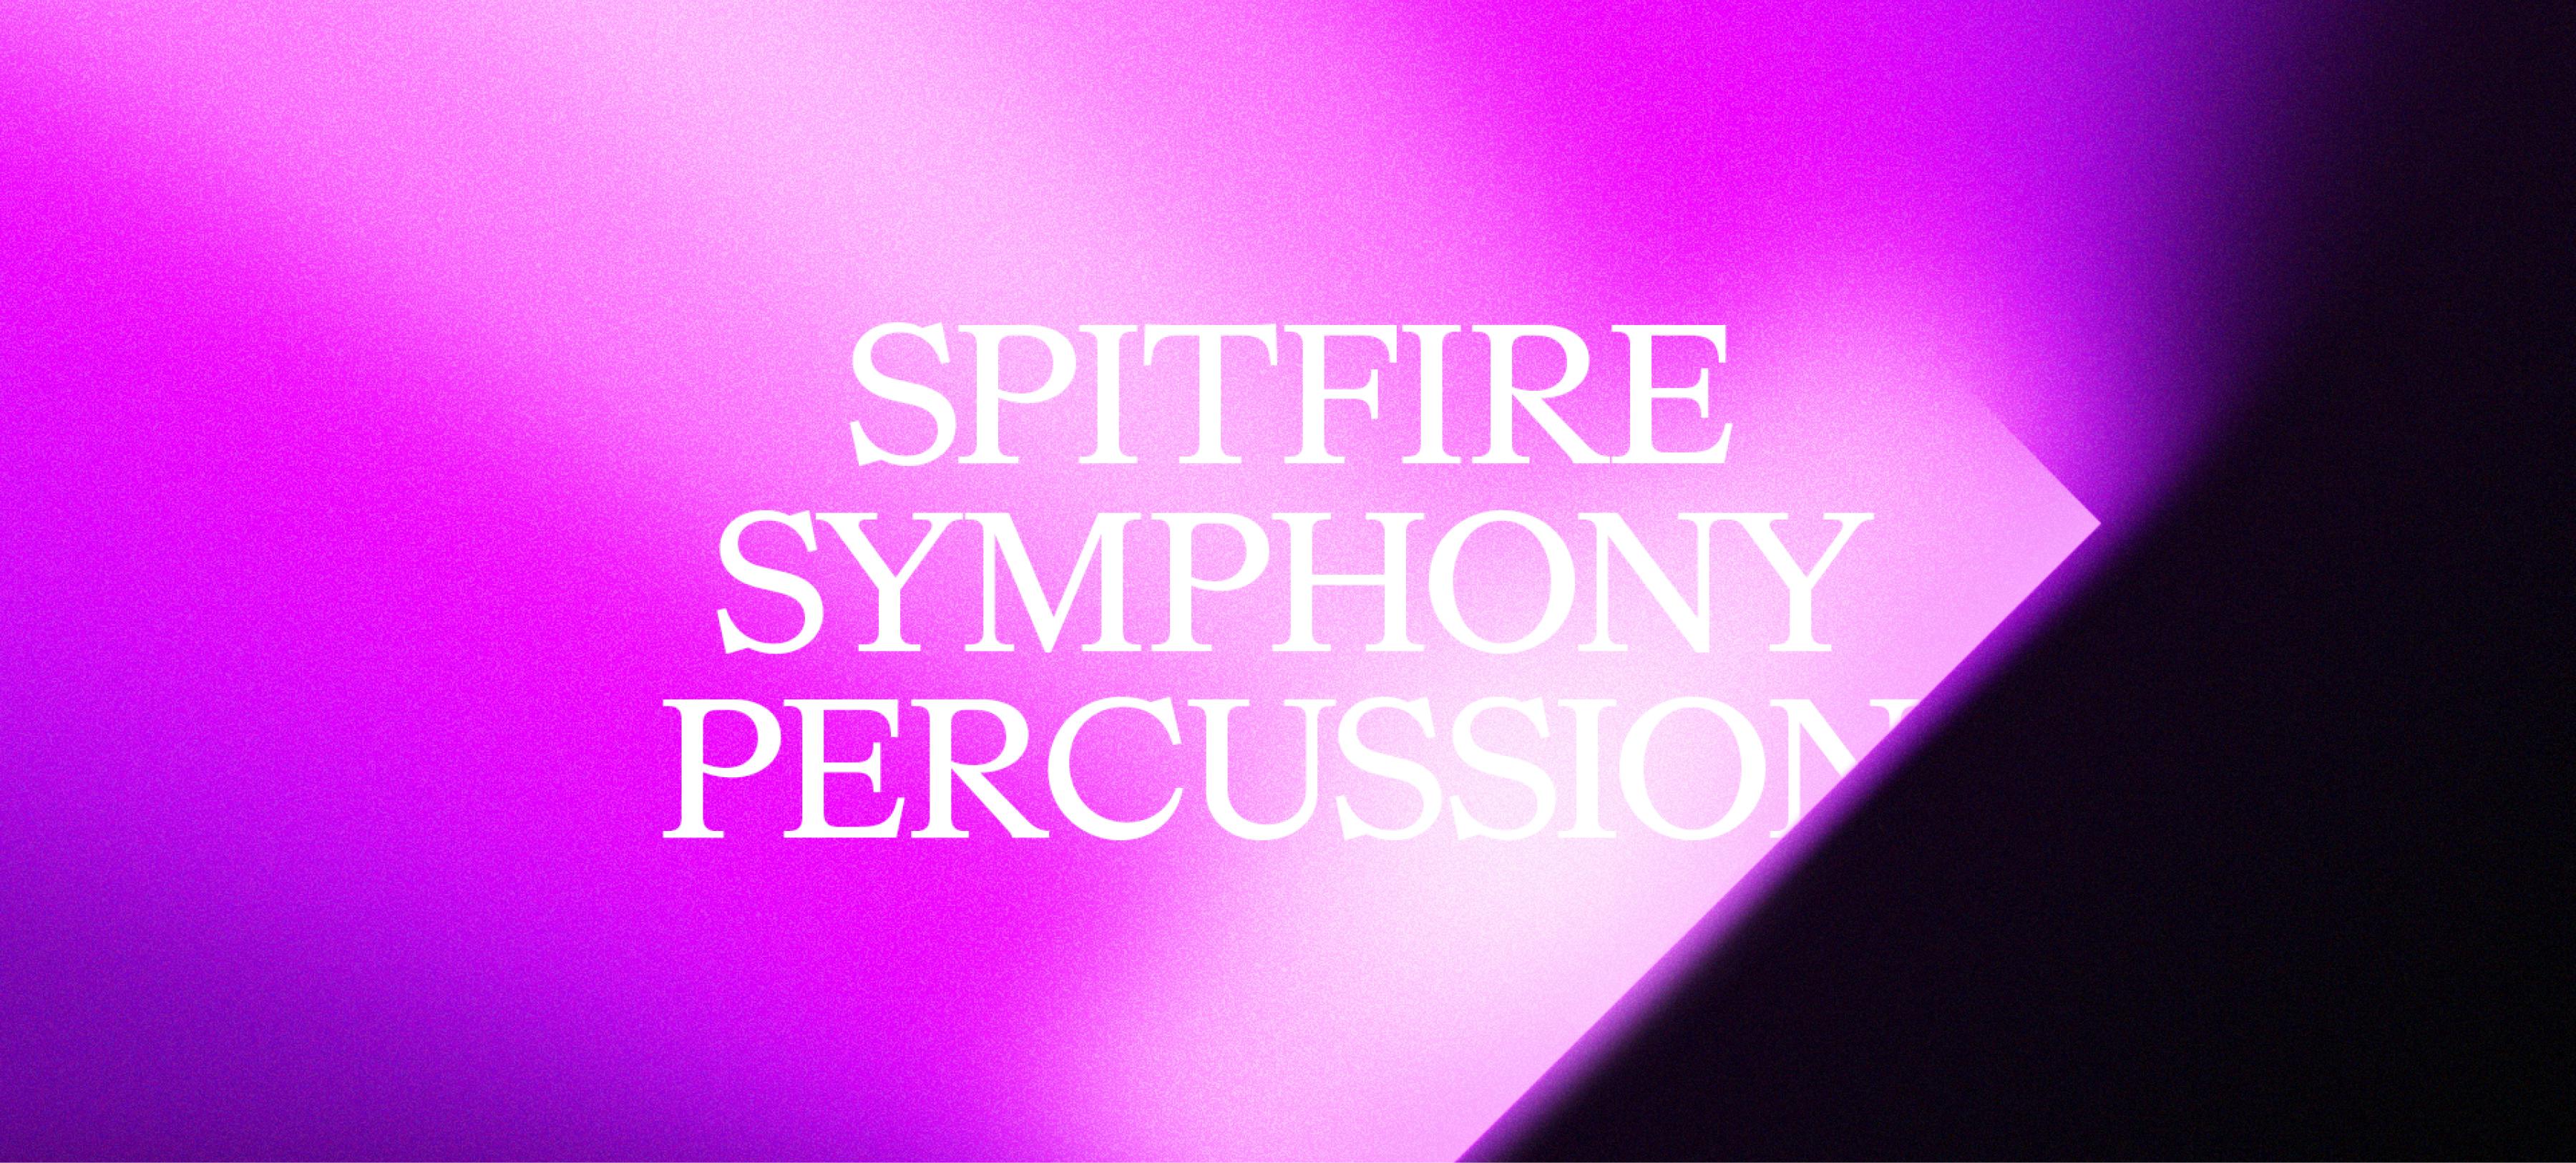 Spitfire Symphony Percussion